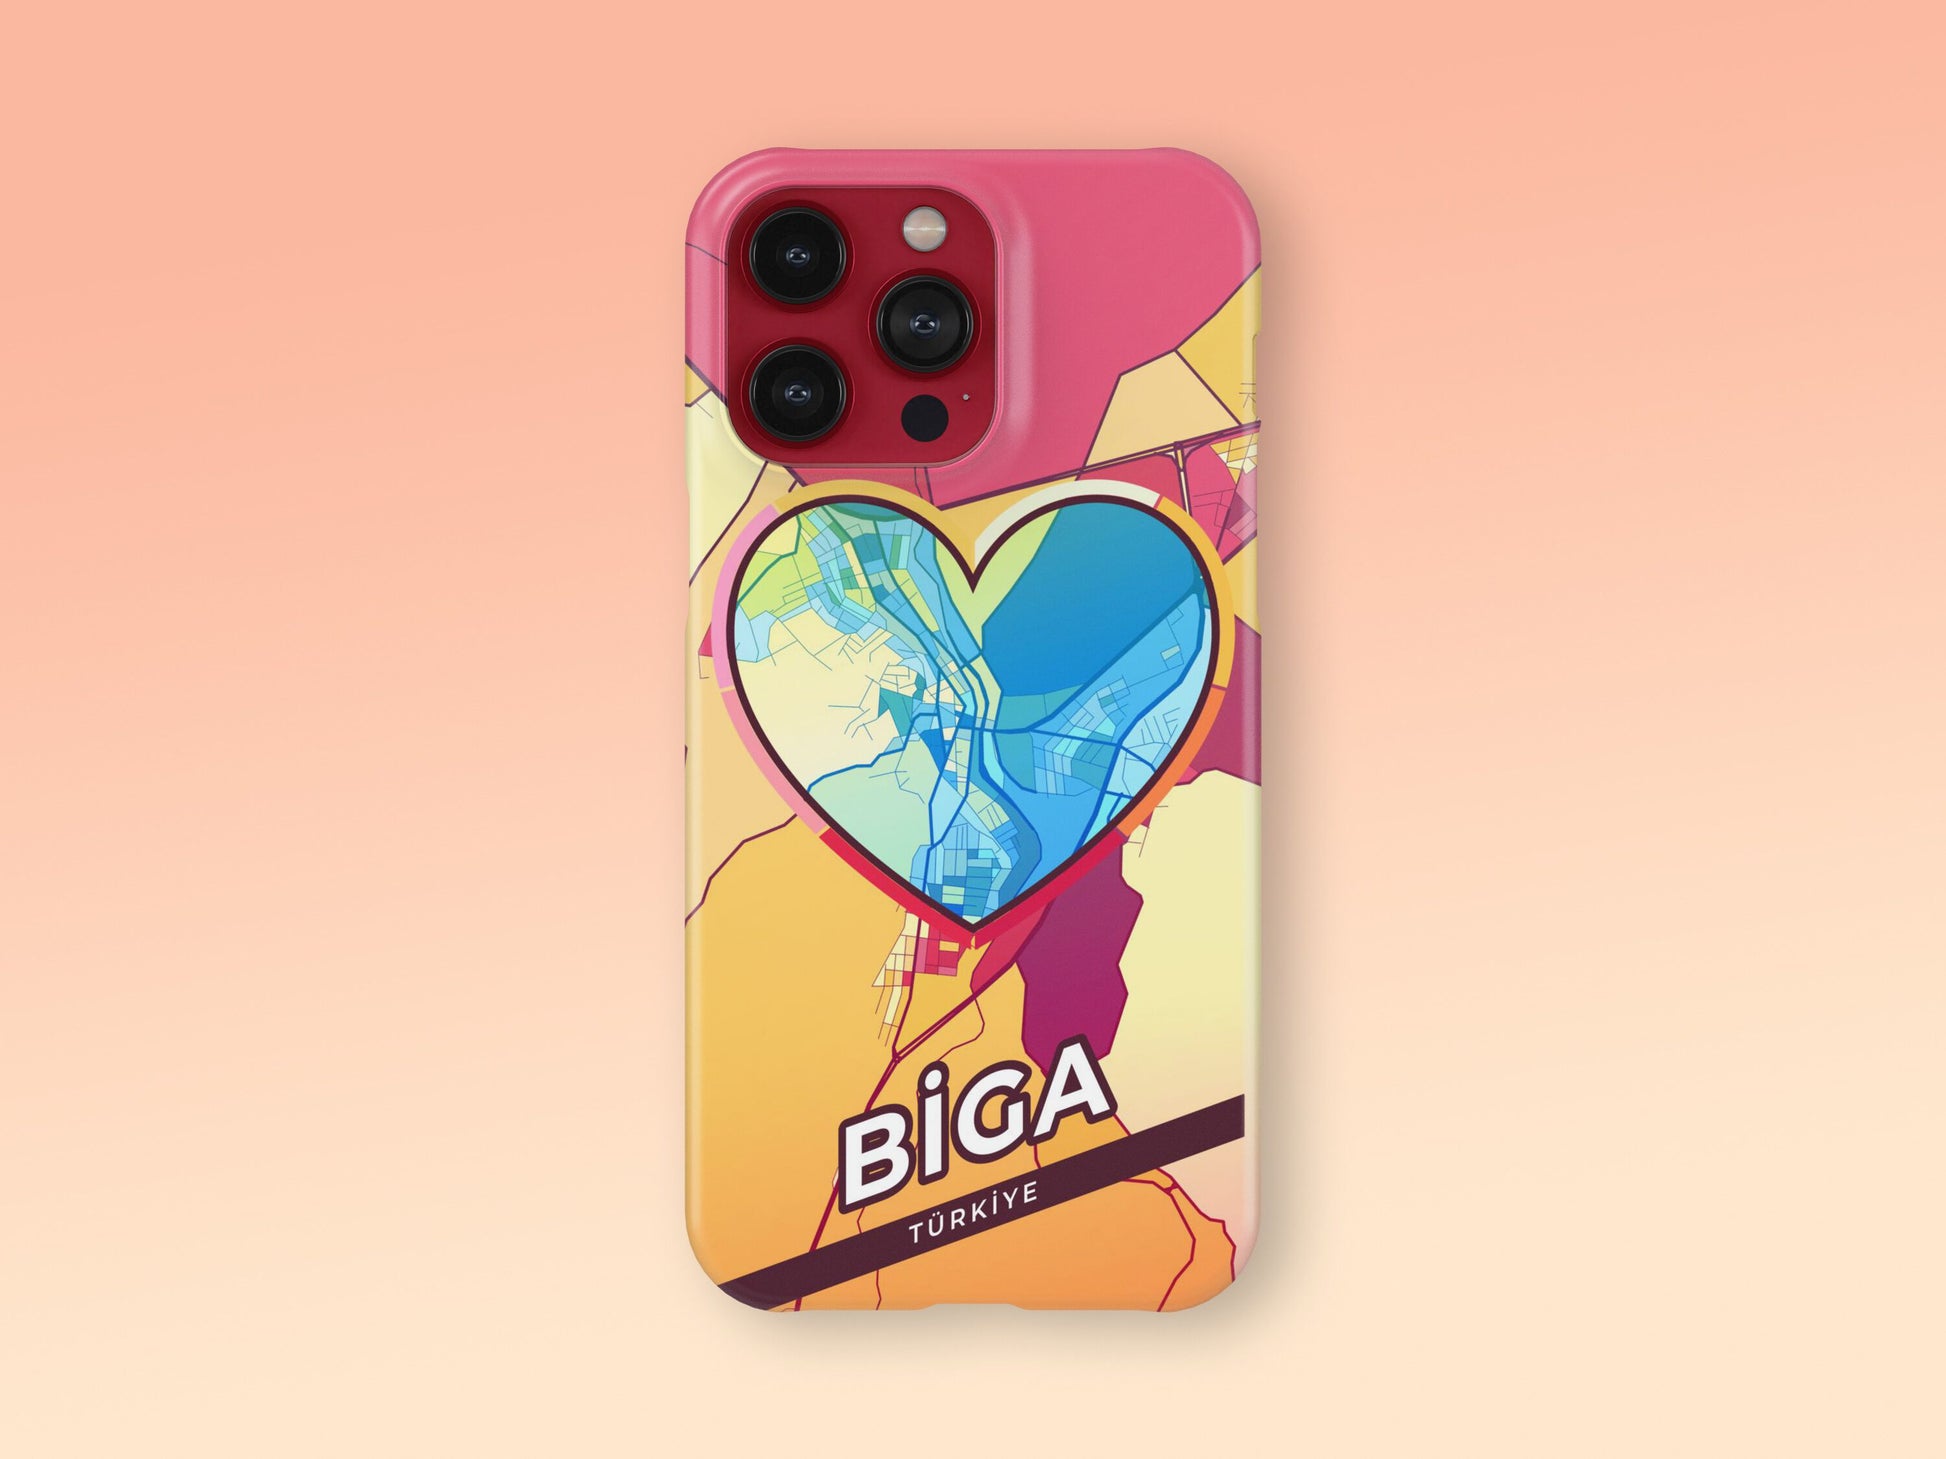 Biga Turkey slim phone case with colorful icon. Birthday, wedding or housewarming gift. Couple match cases. 2